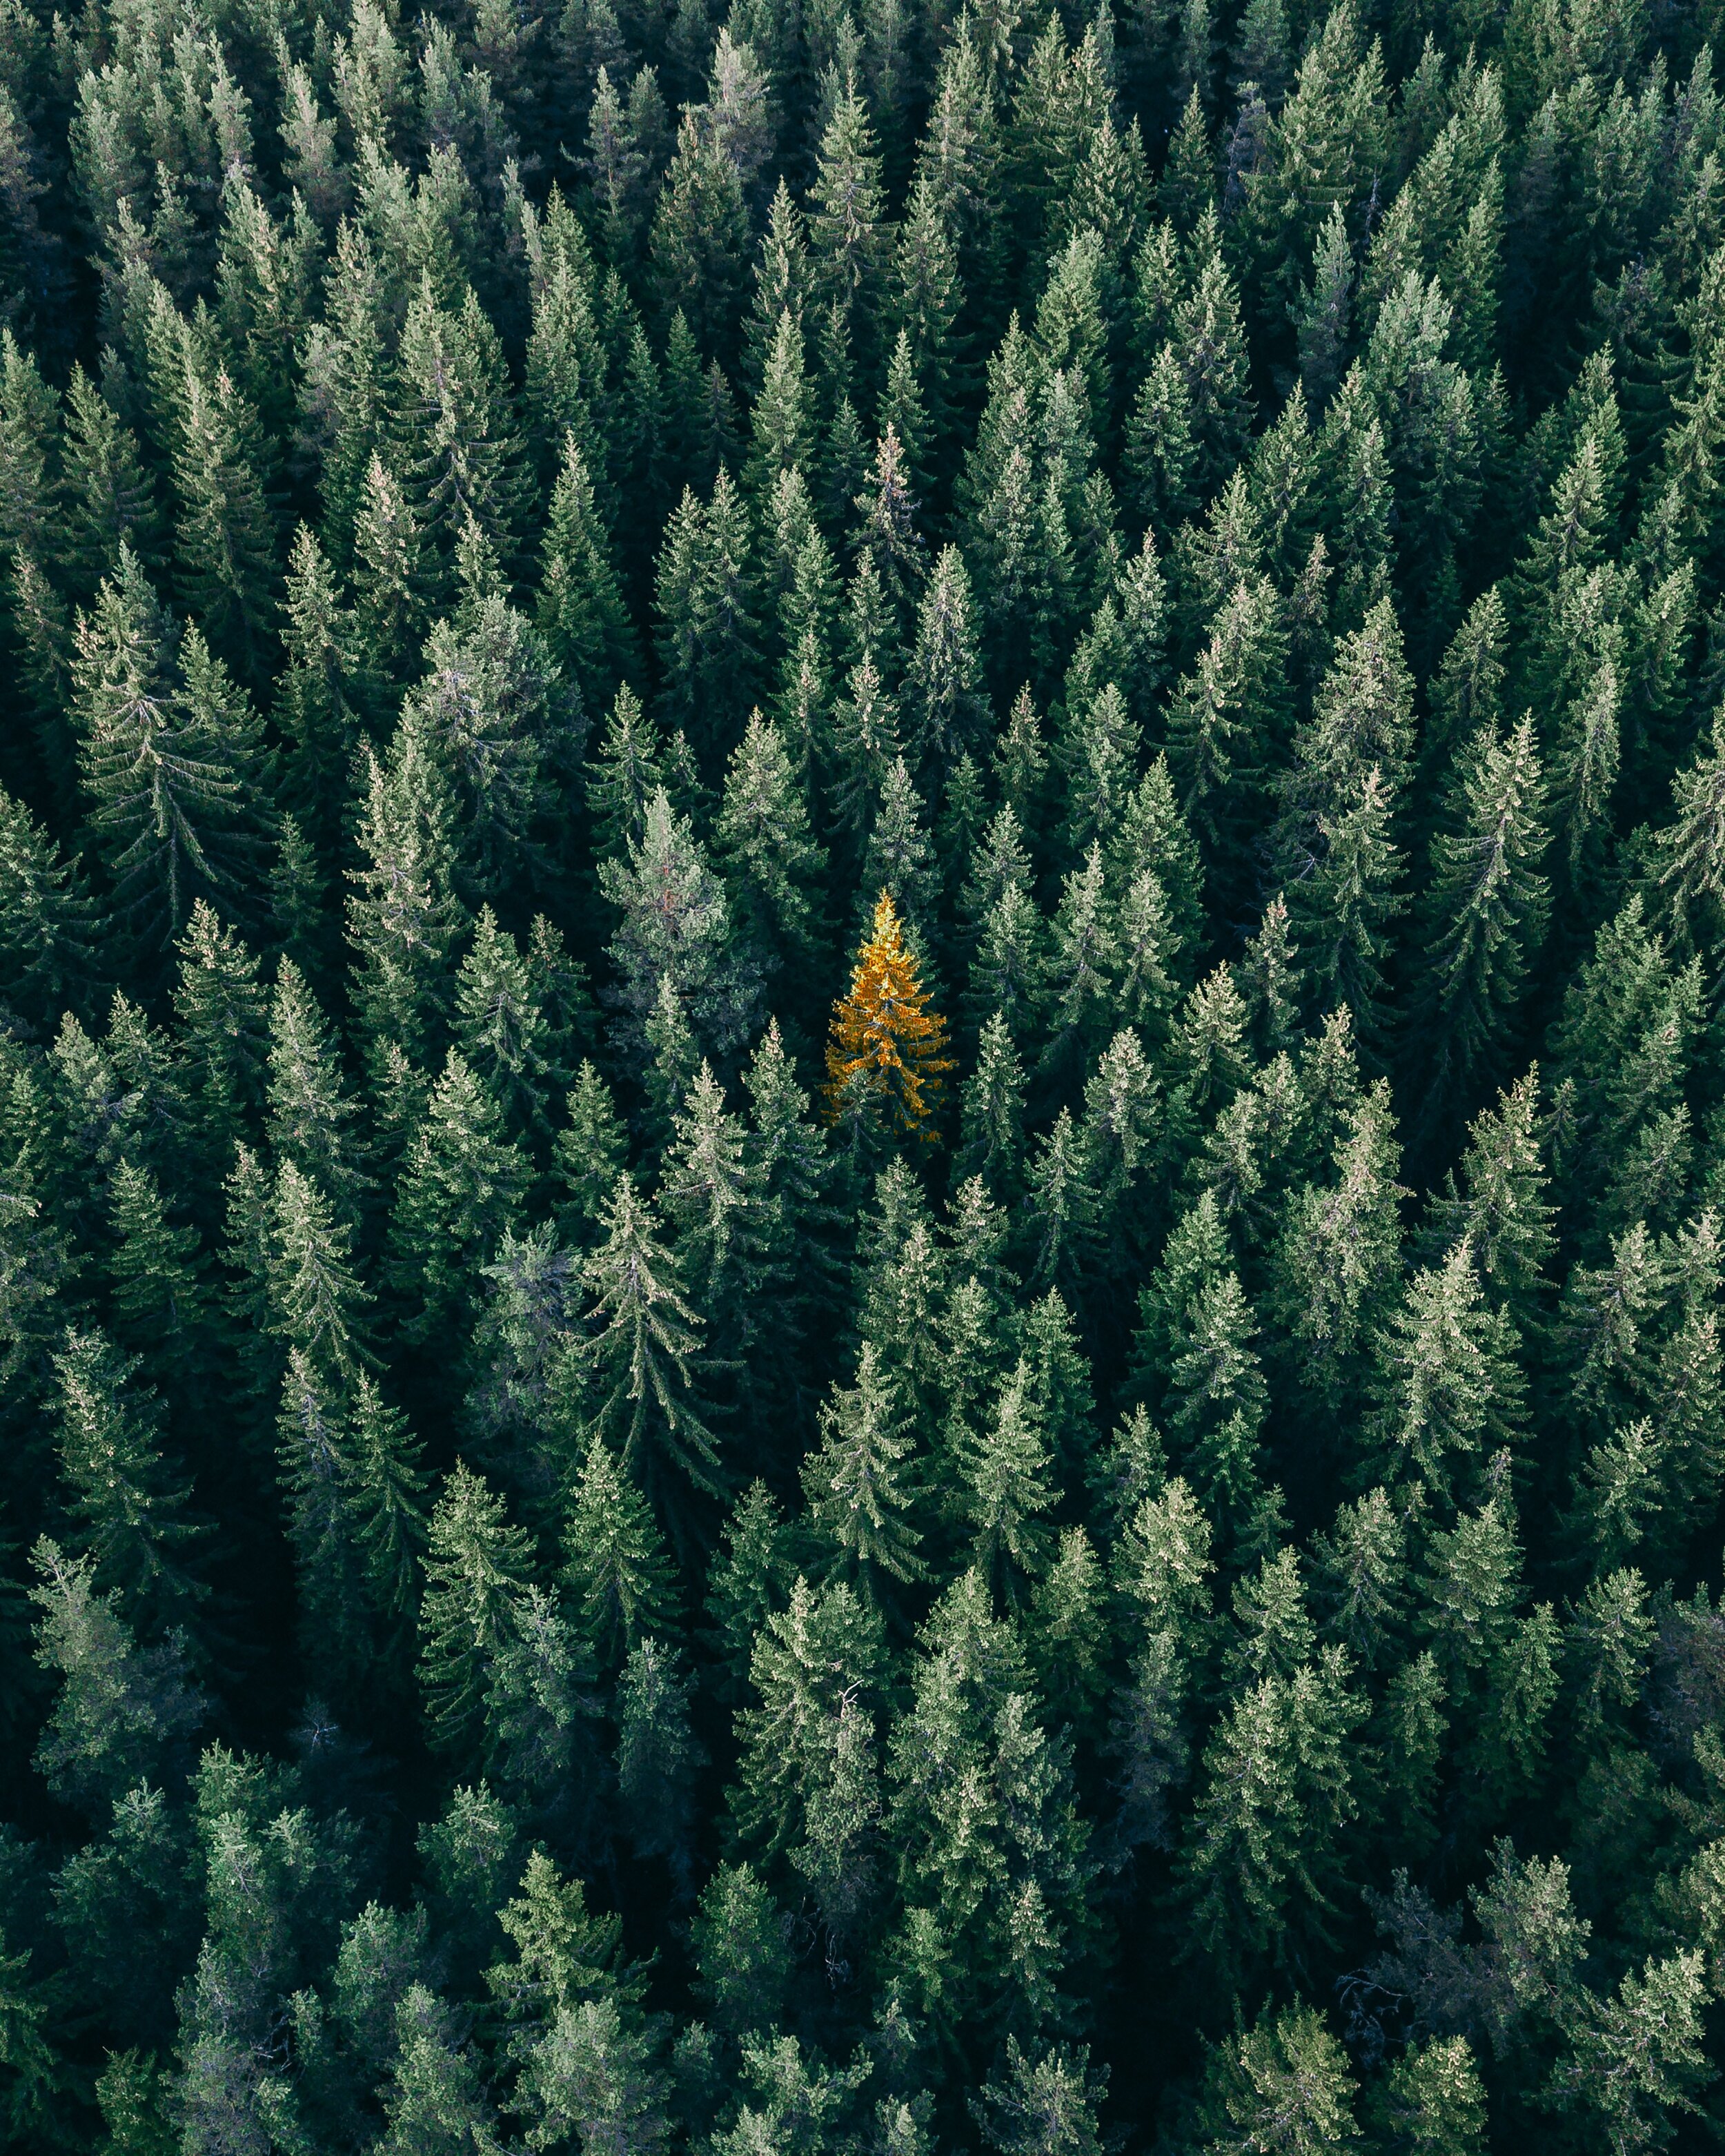 Christopher Rusev - aerial photos of conifer trees.jpg